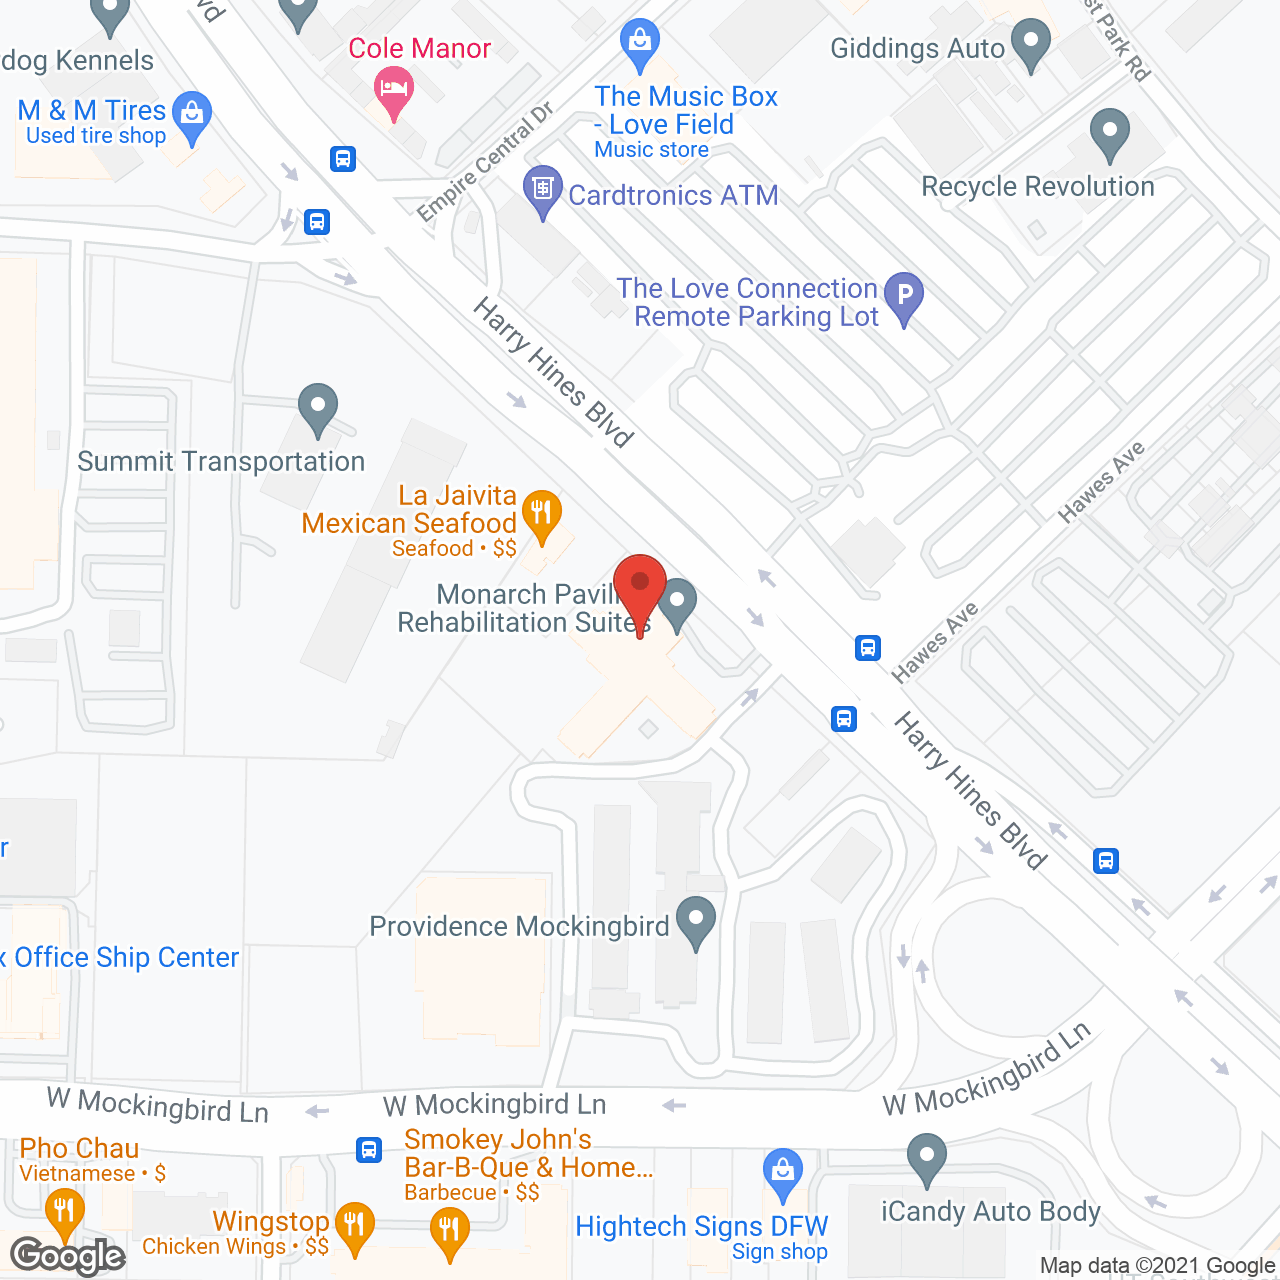 Monarch Pavilion Rehabilitation in google map